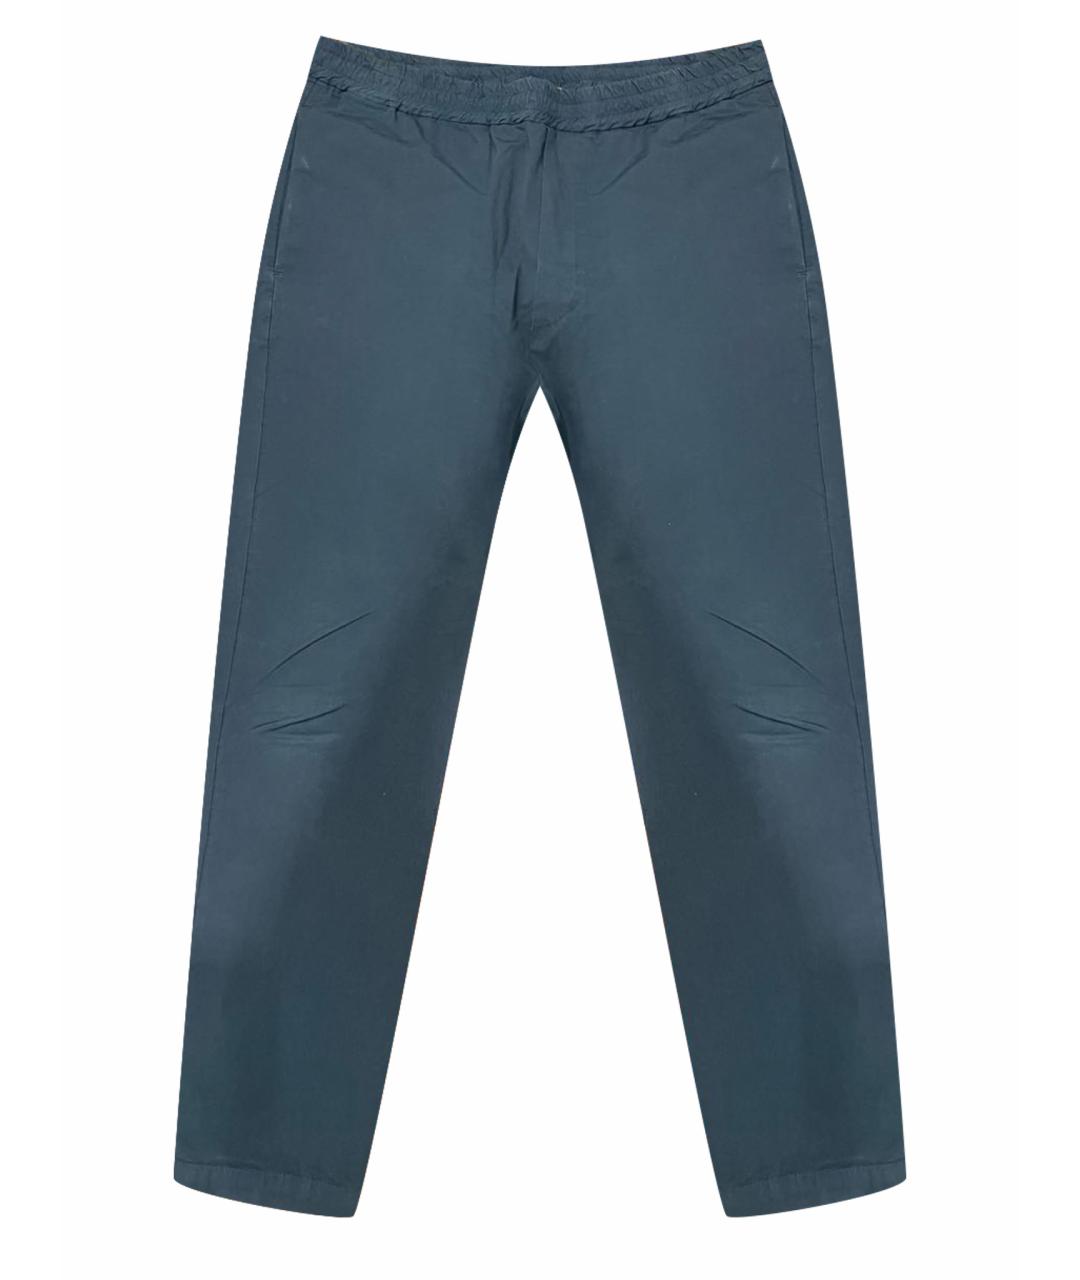 BARENA VENEZIA Темно-синие хлопковые брюки чинос, фото 1